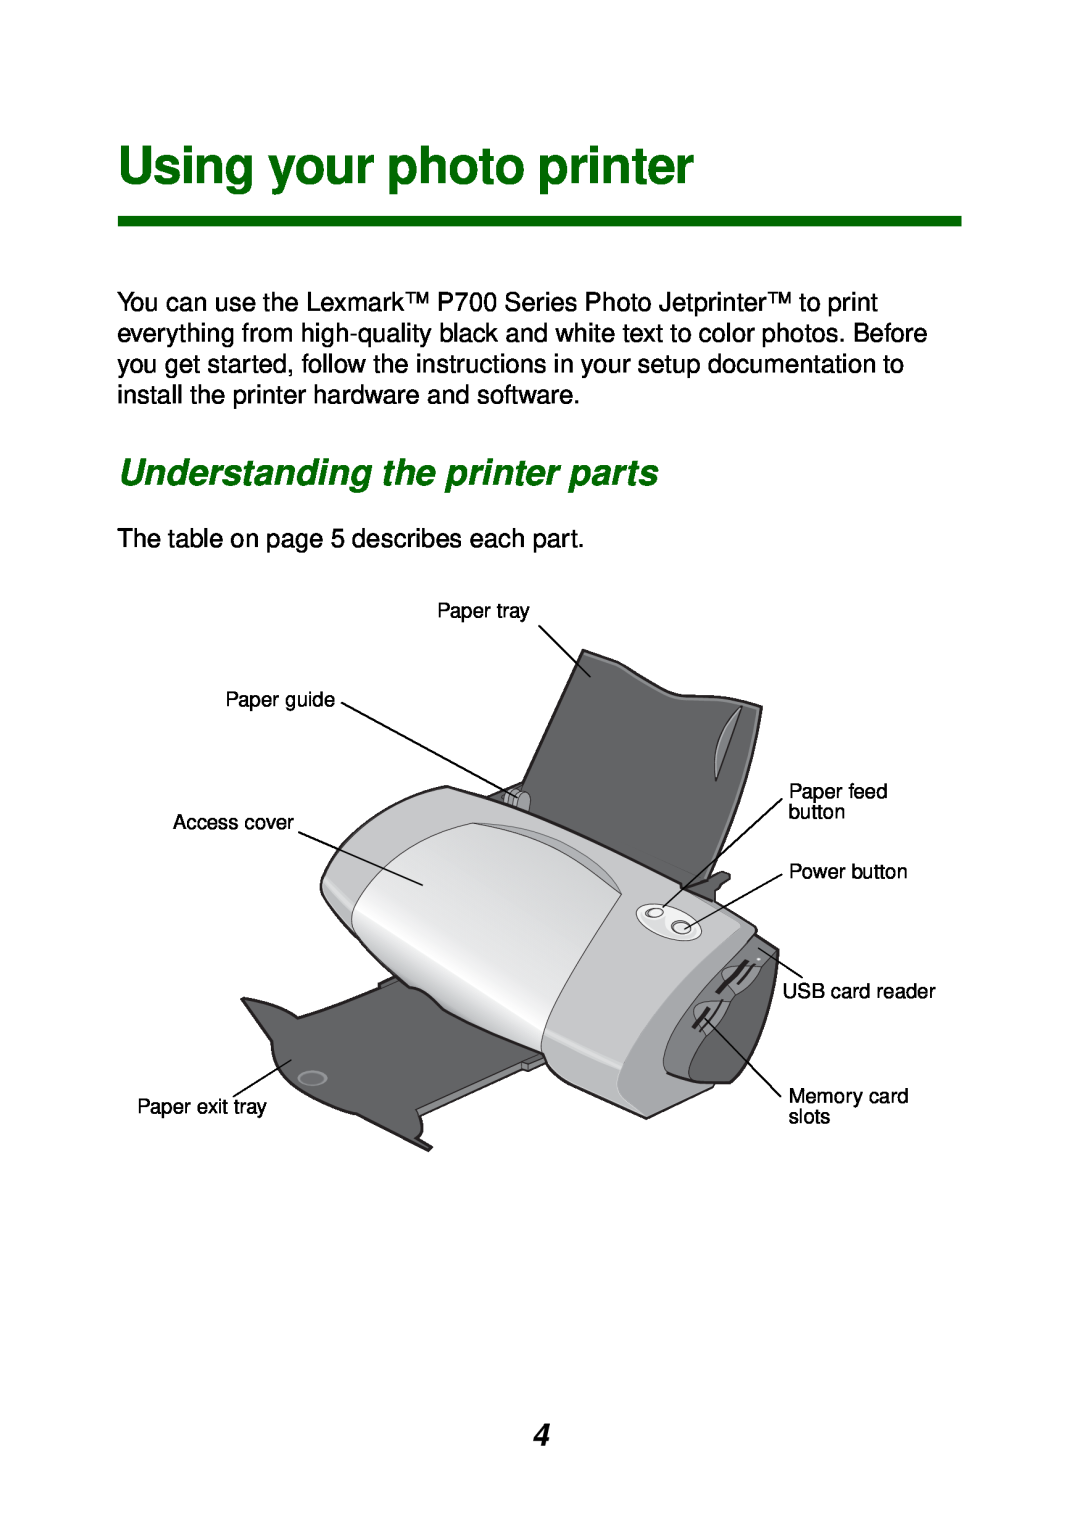 Lexmark P700 manual Using your photo printer, Understanding the printer parts 